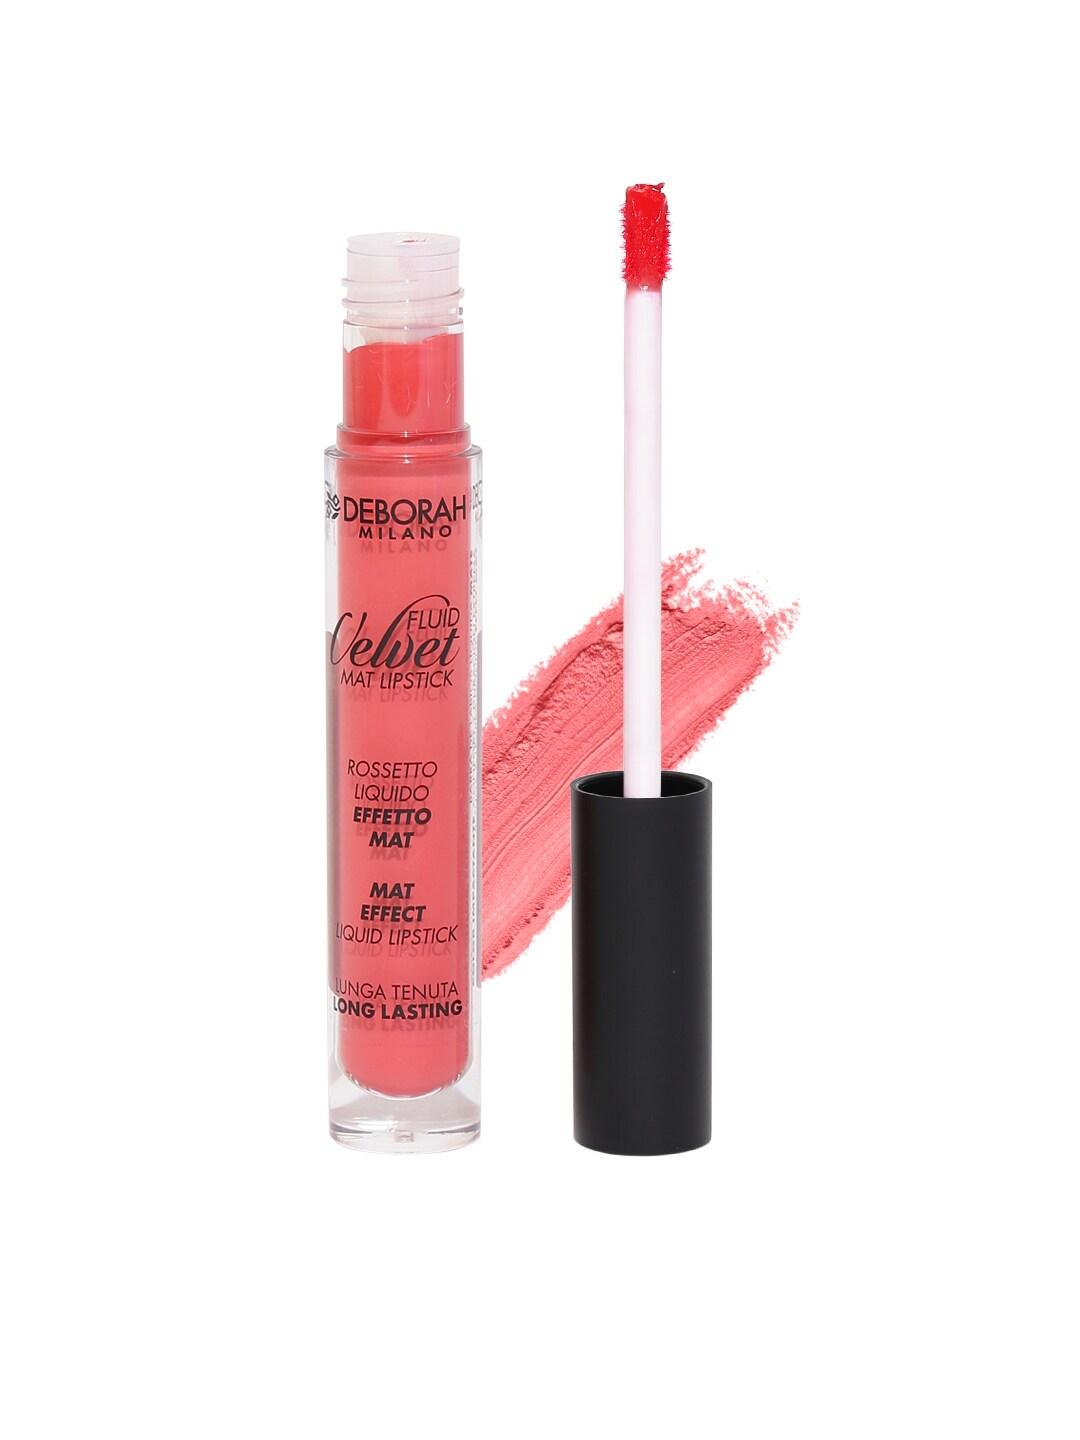 Deborah Milano Coral Dream Fluid Velvet Matte Lipstick 11